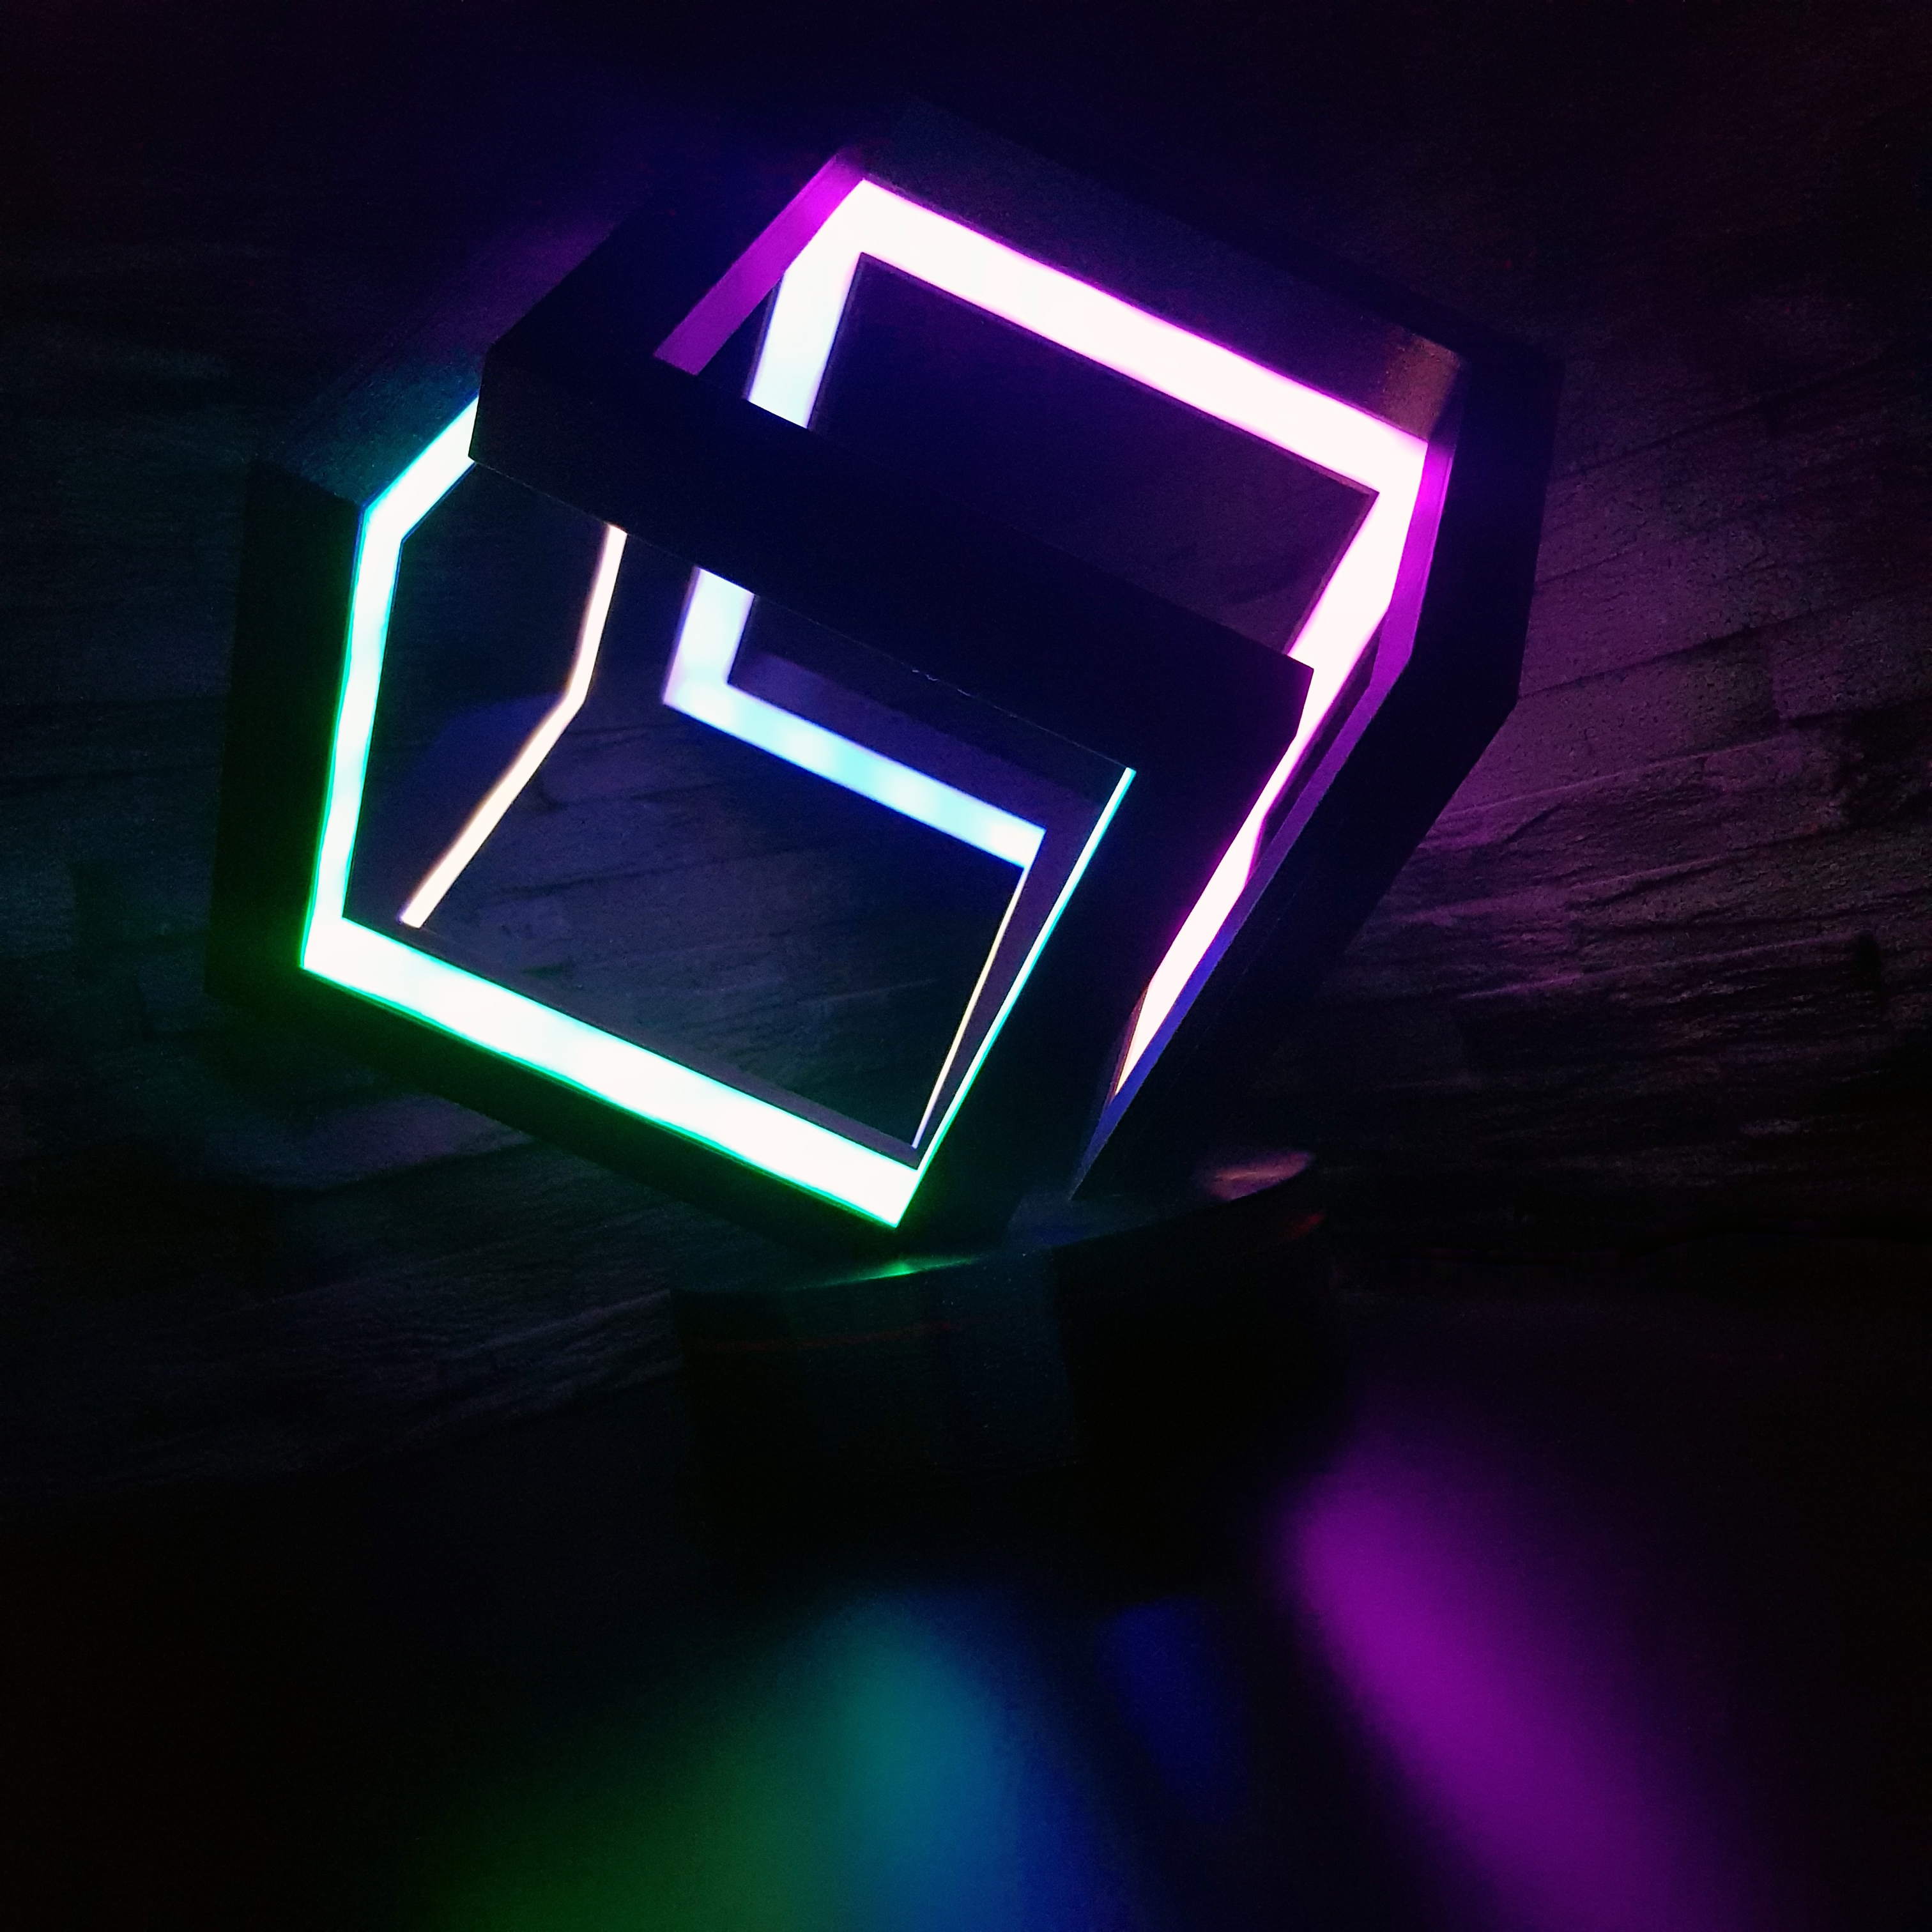 LED Infinity cube light